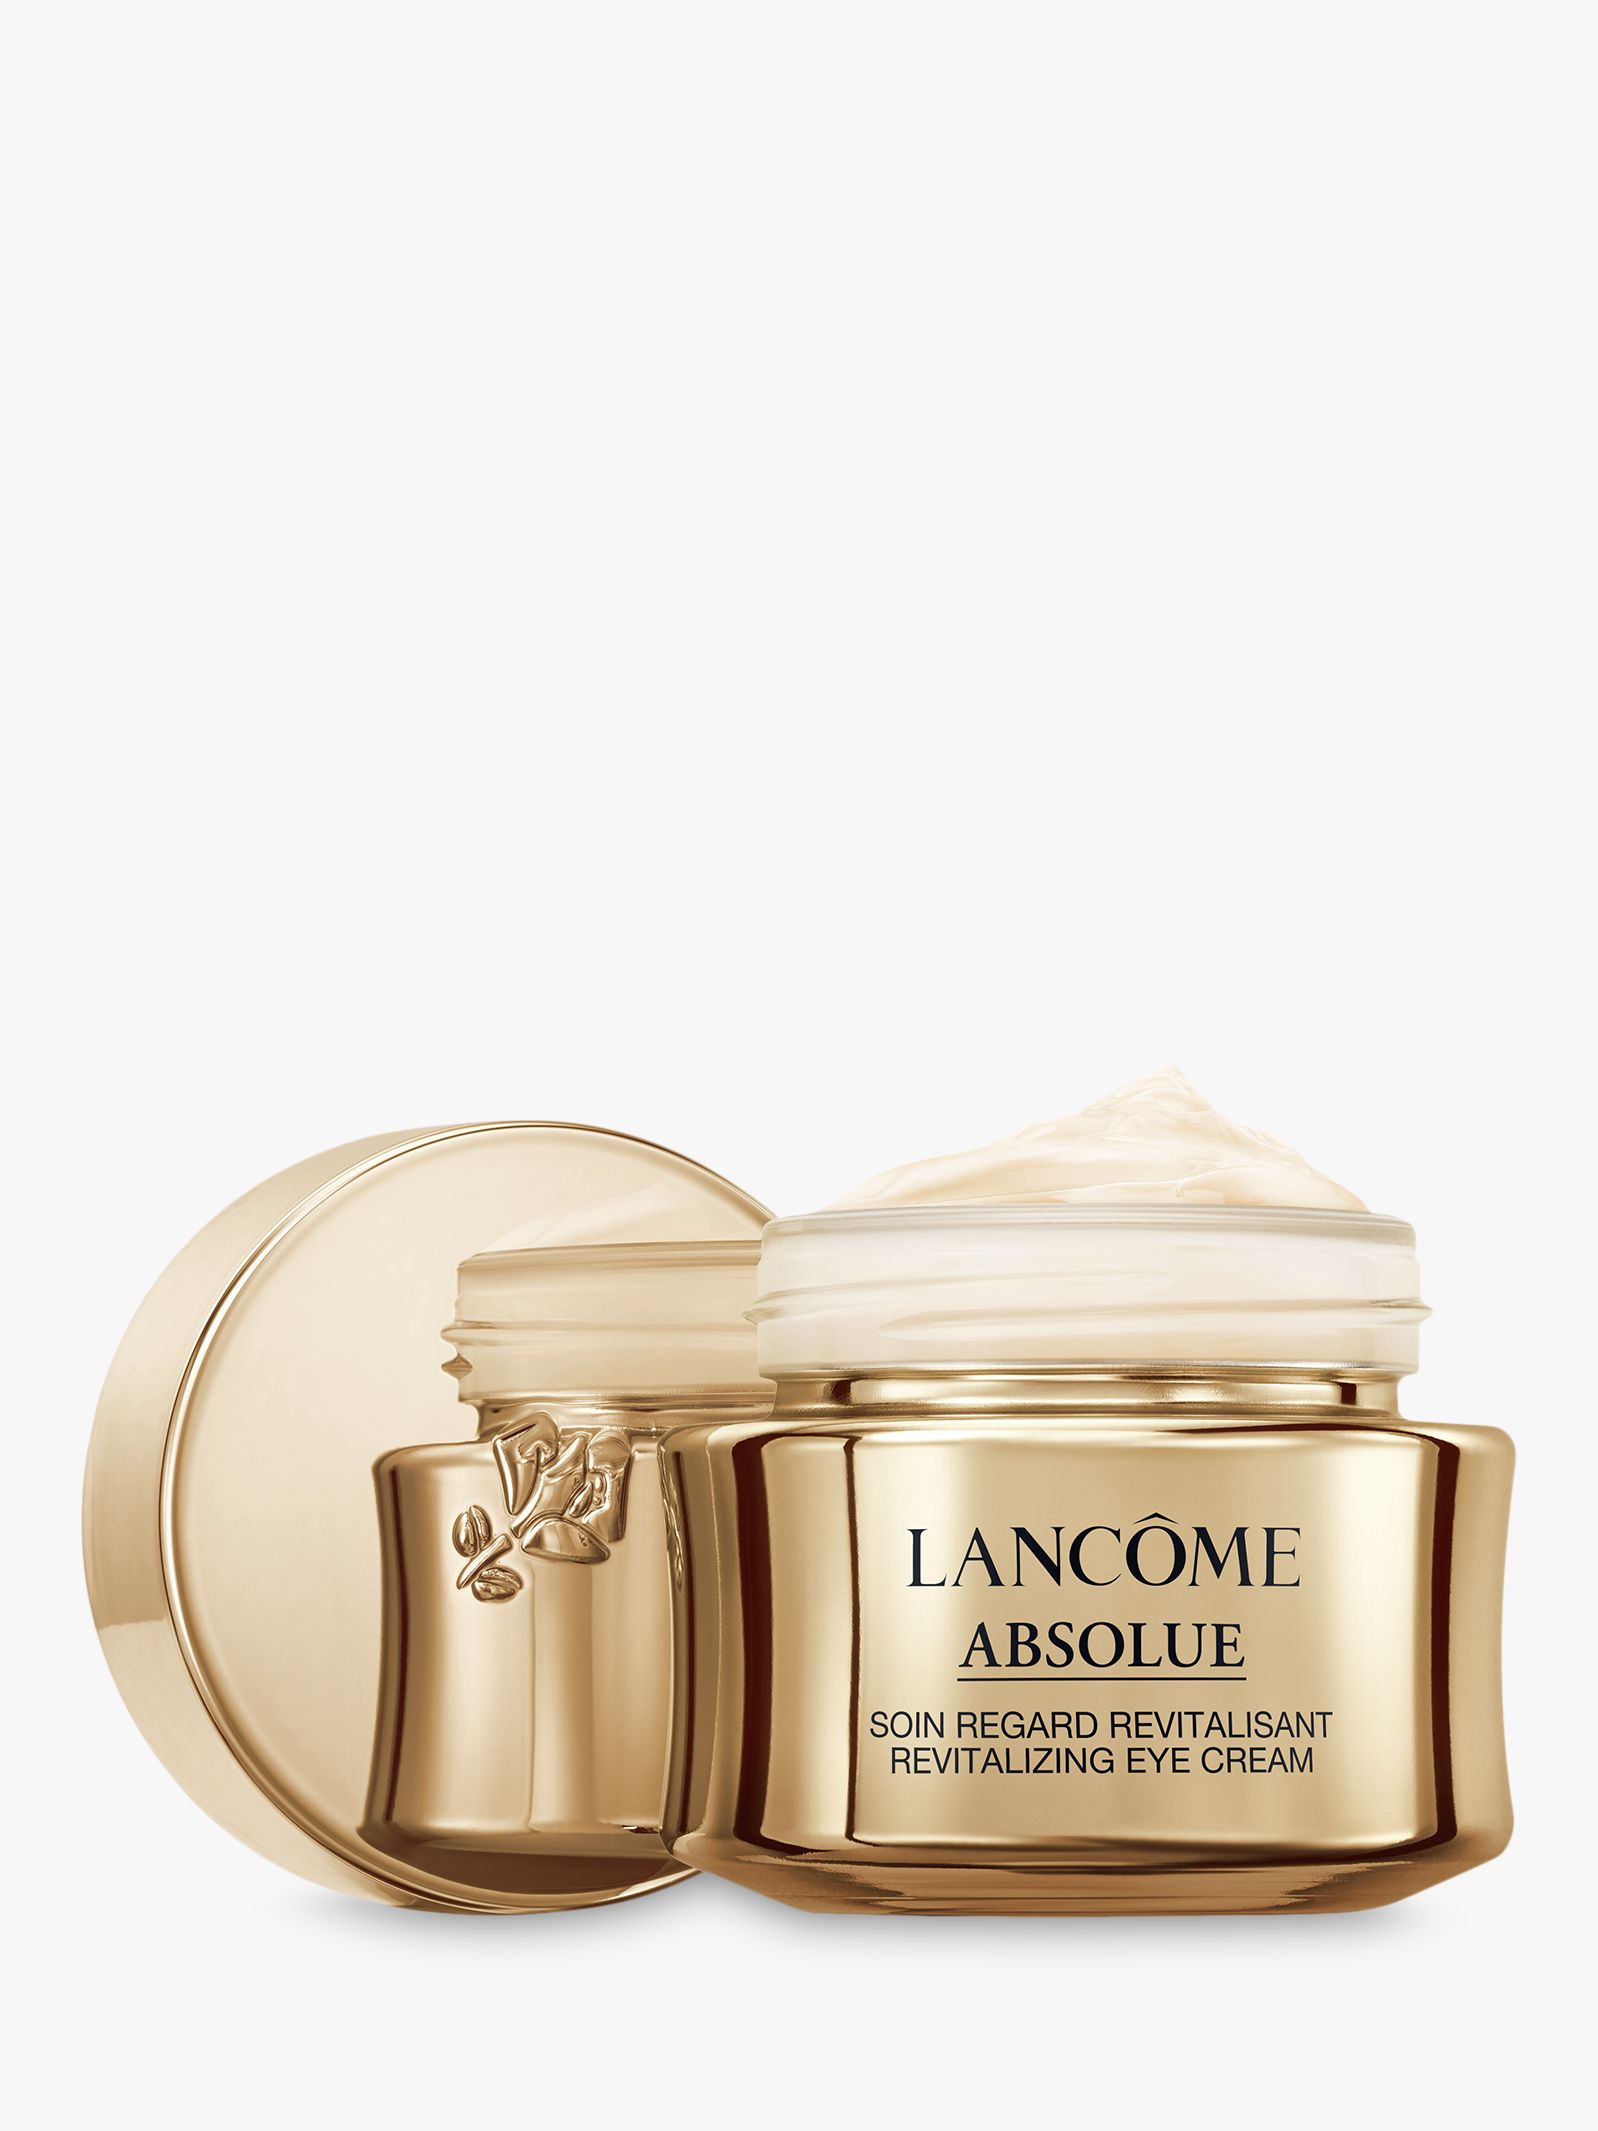 Lancôme Absolue Eye Cream, 20ml